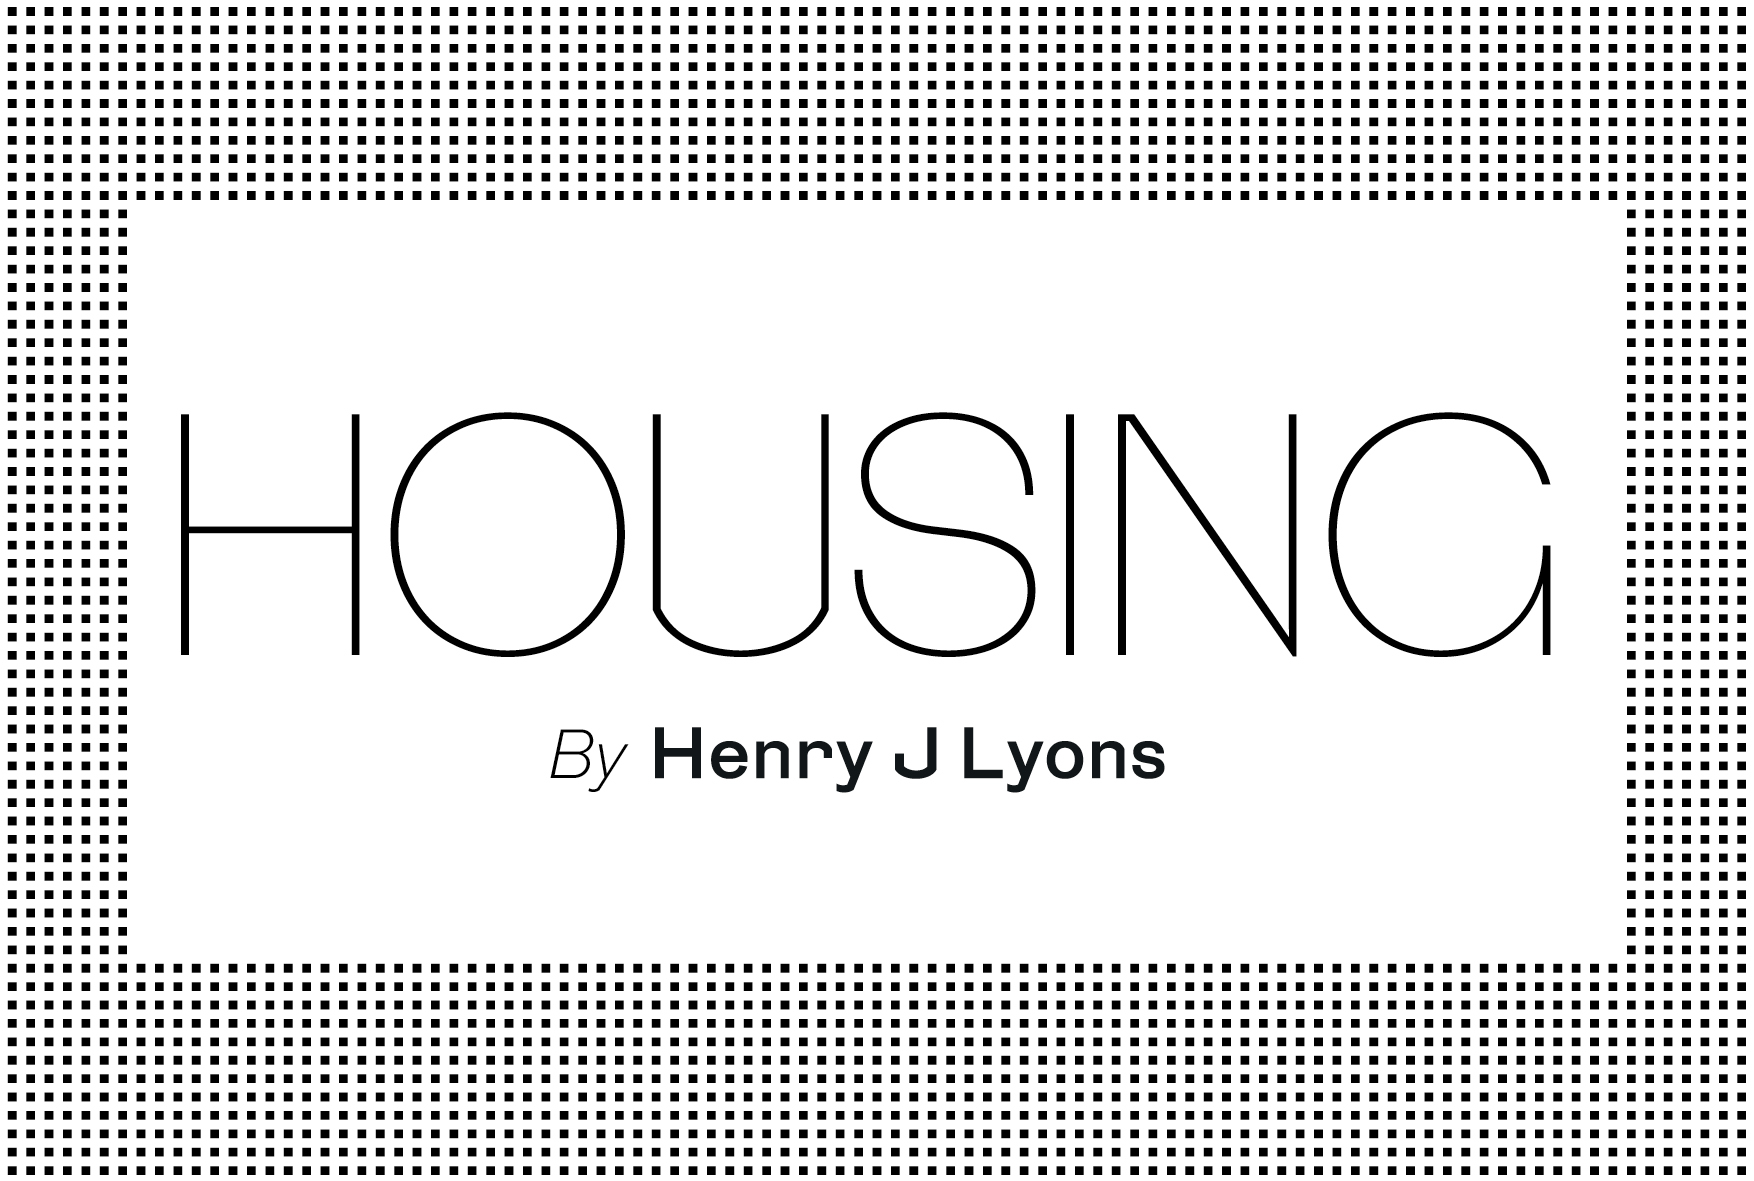 Housing by Henry J Lyons